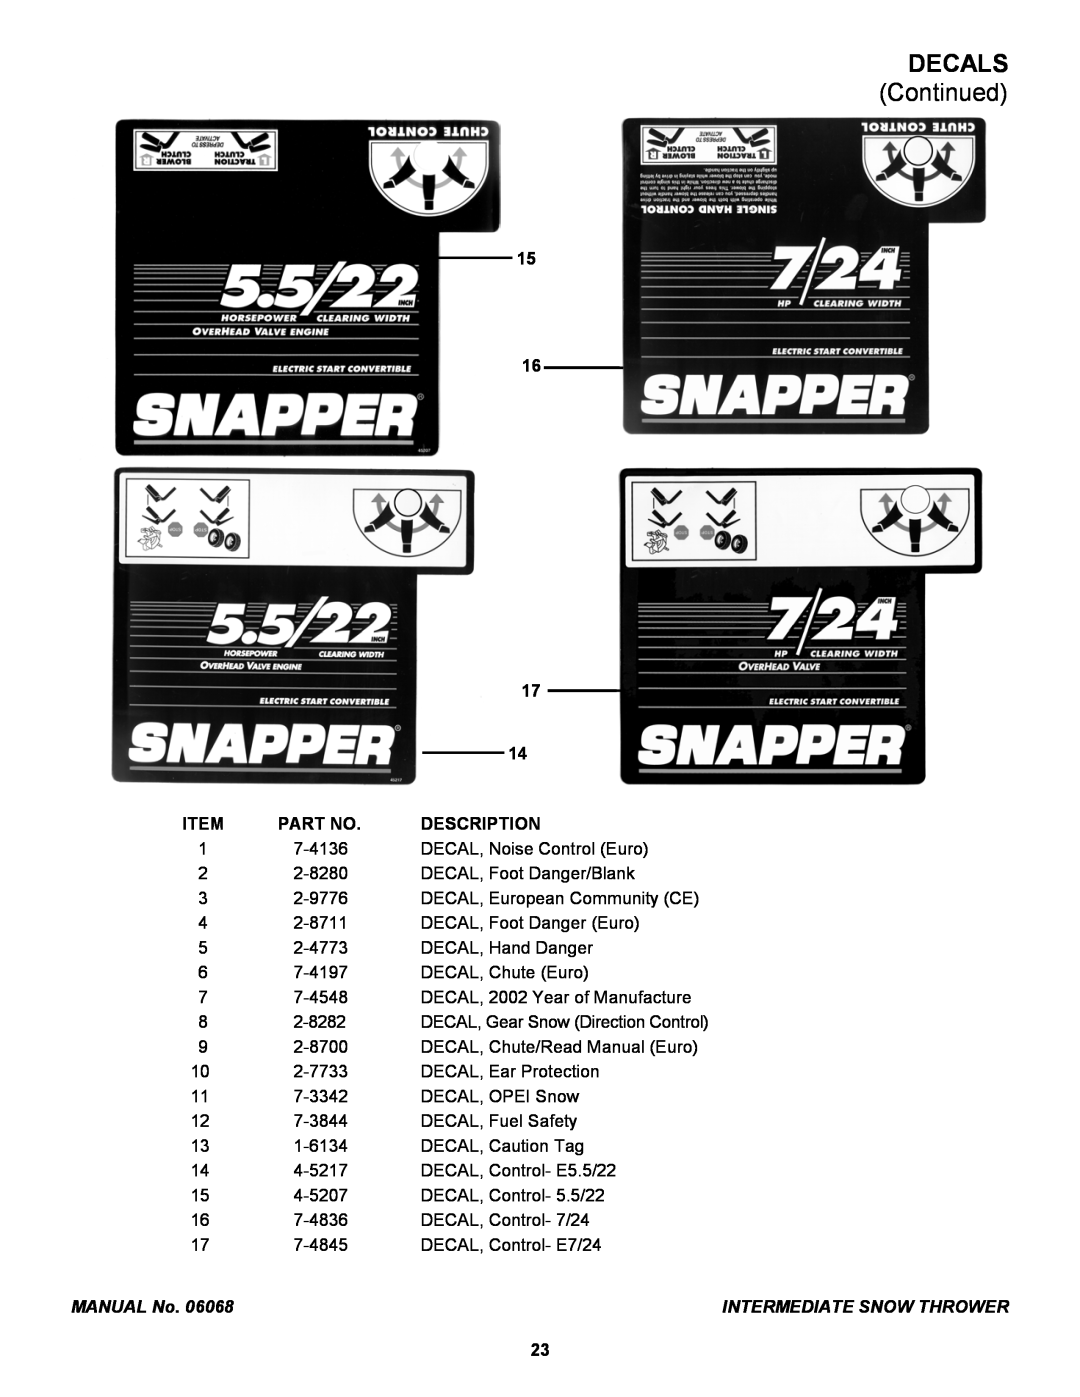 Snapper 155224, EI7244, EI55224, 17244 manual Decals, Continued, Description, MANUAL No, Intermediate Snow Thrower 